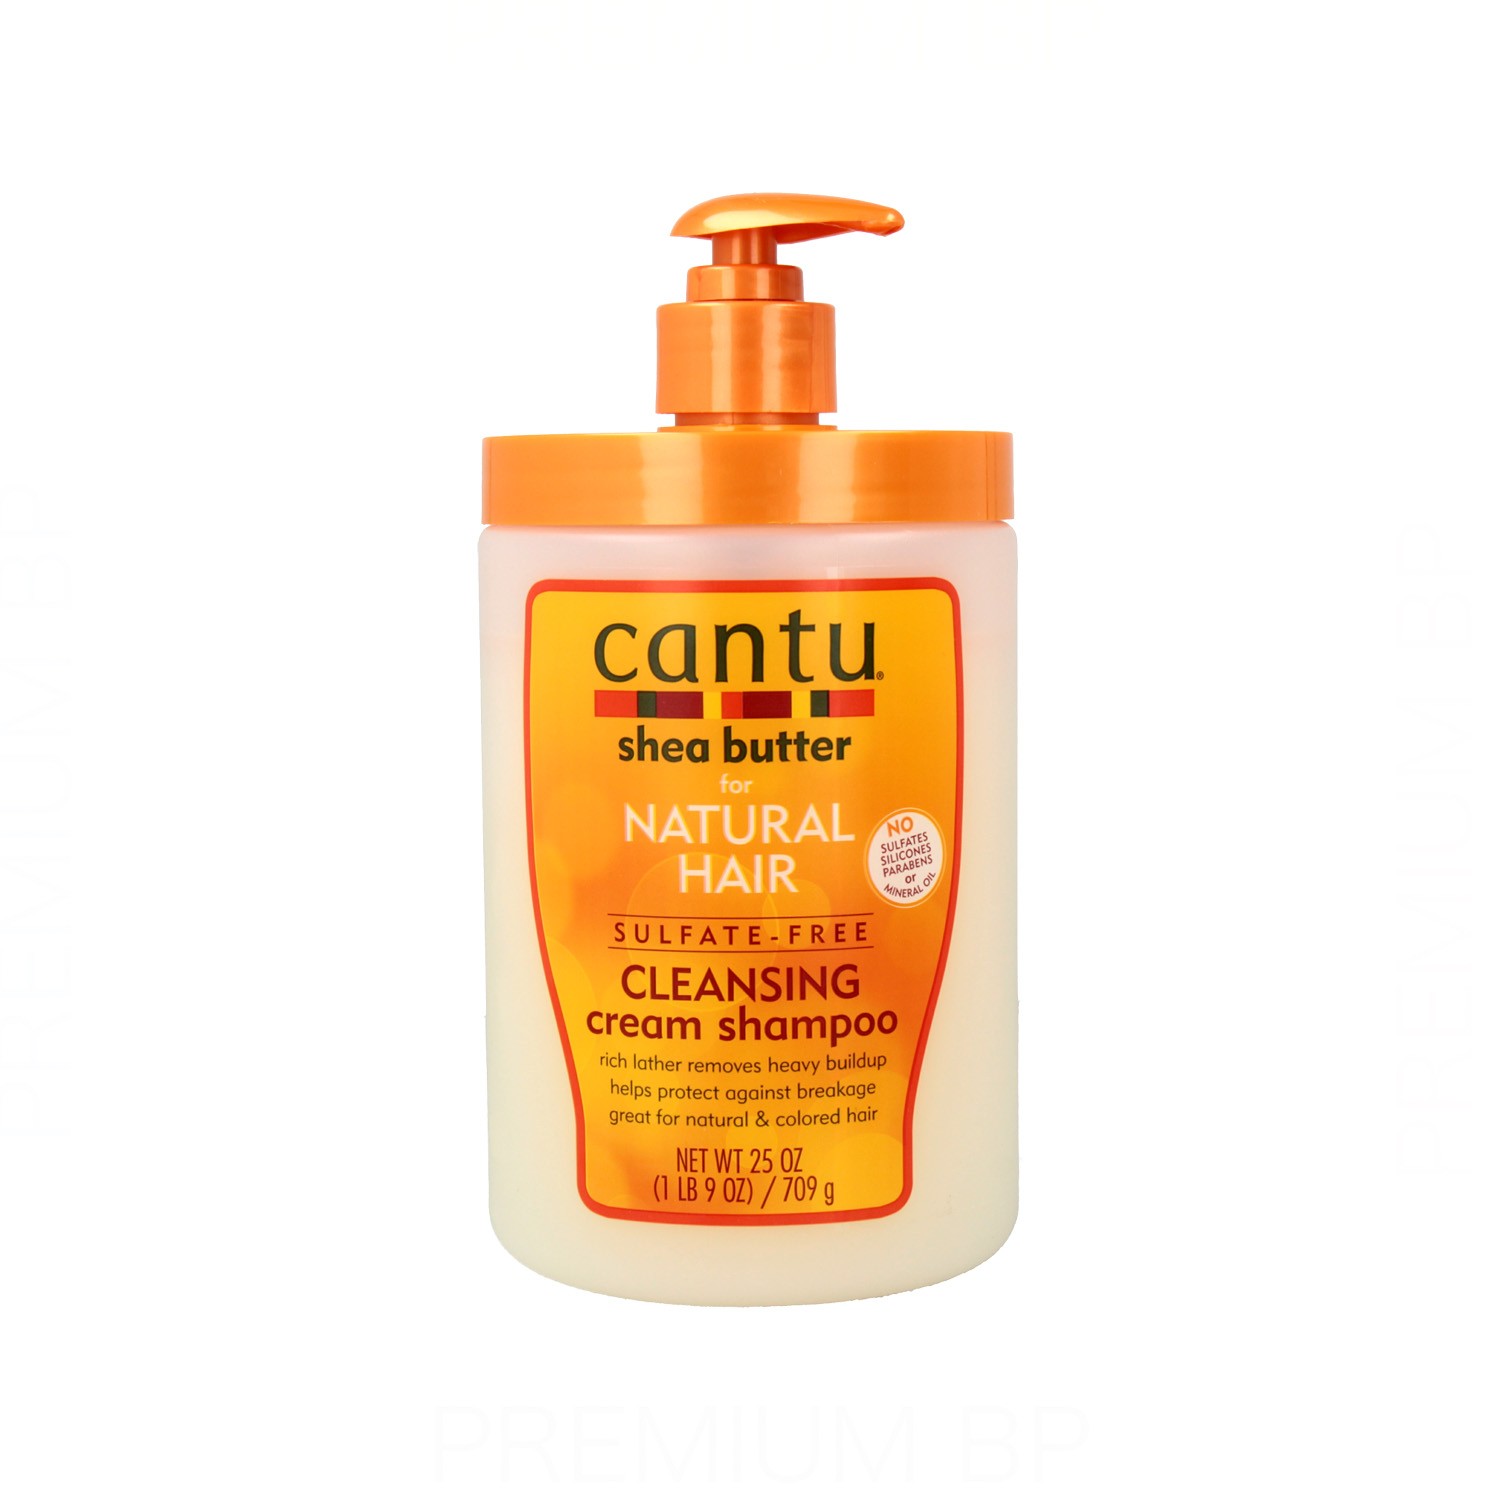 Cantu Shea Butter Natural Hair Cleansing Shampoo 709 gr